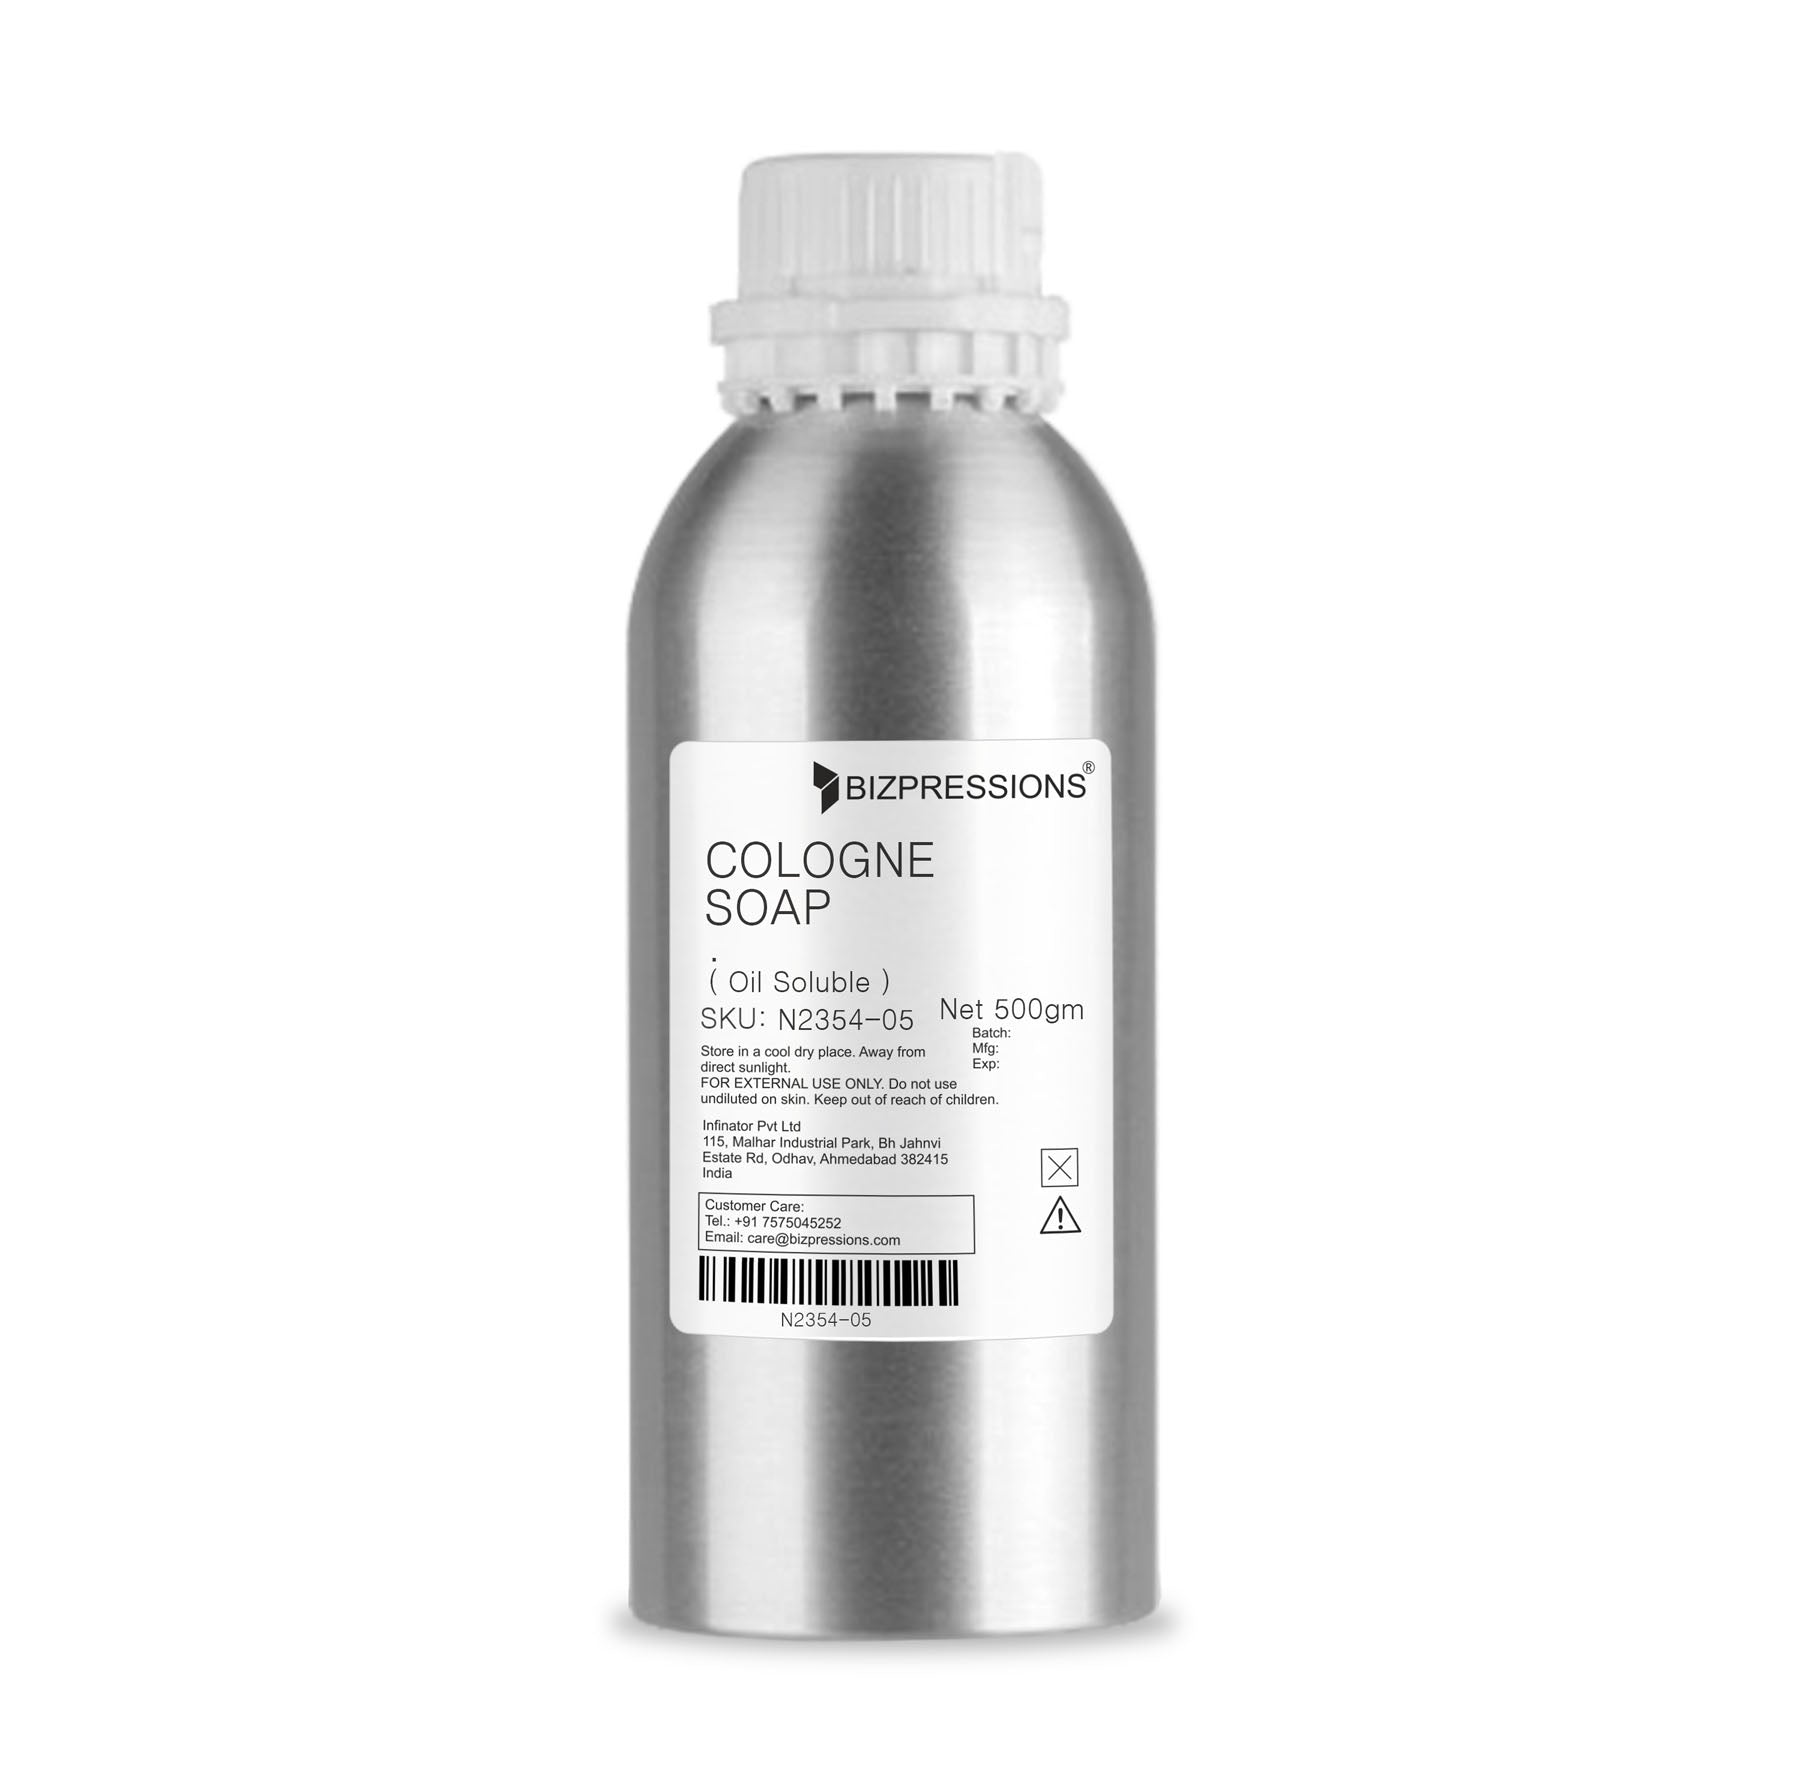 COLOGNE SOAP- Fragrance ( Oil Soluble ) - 500 gm